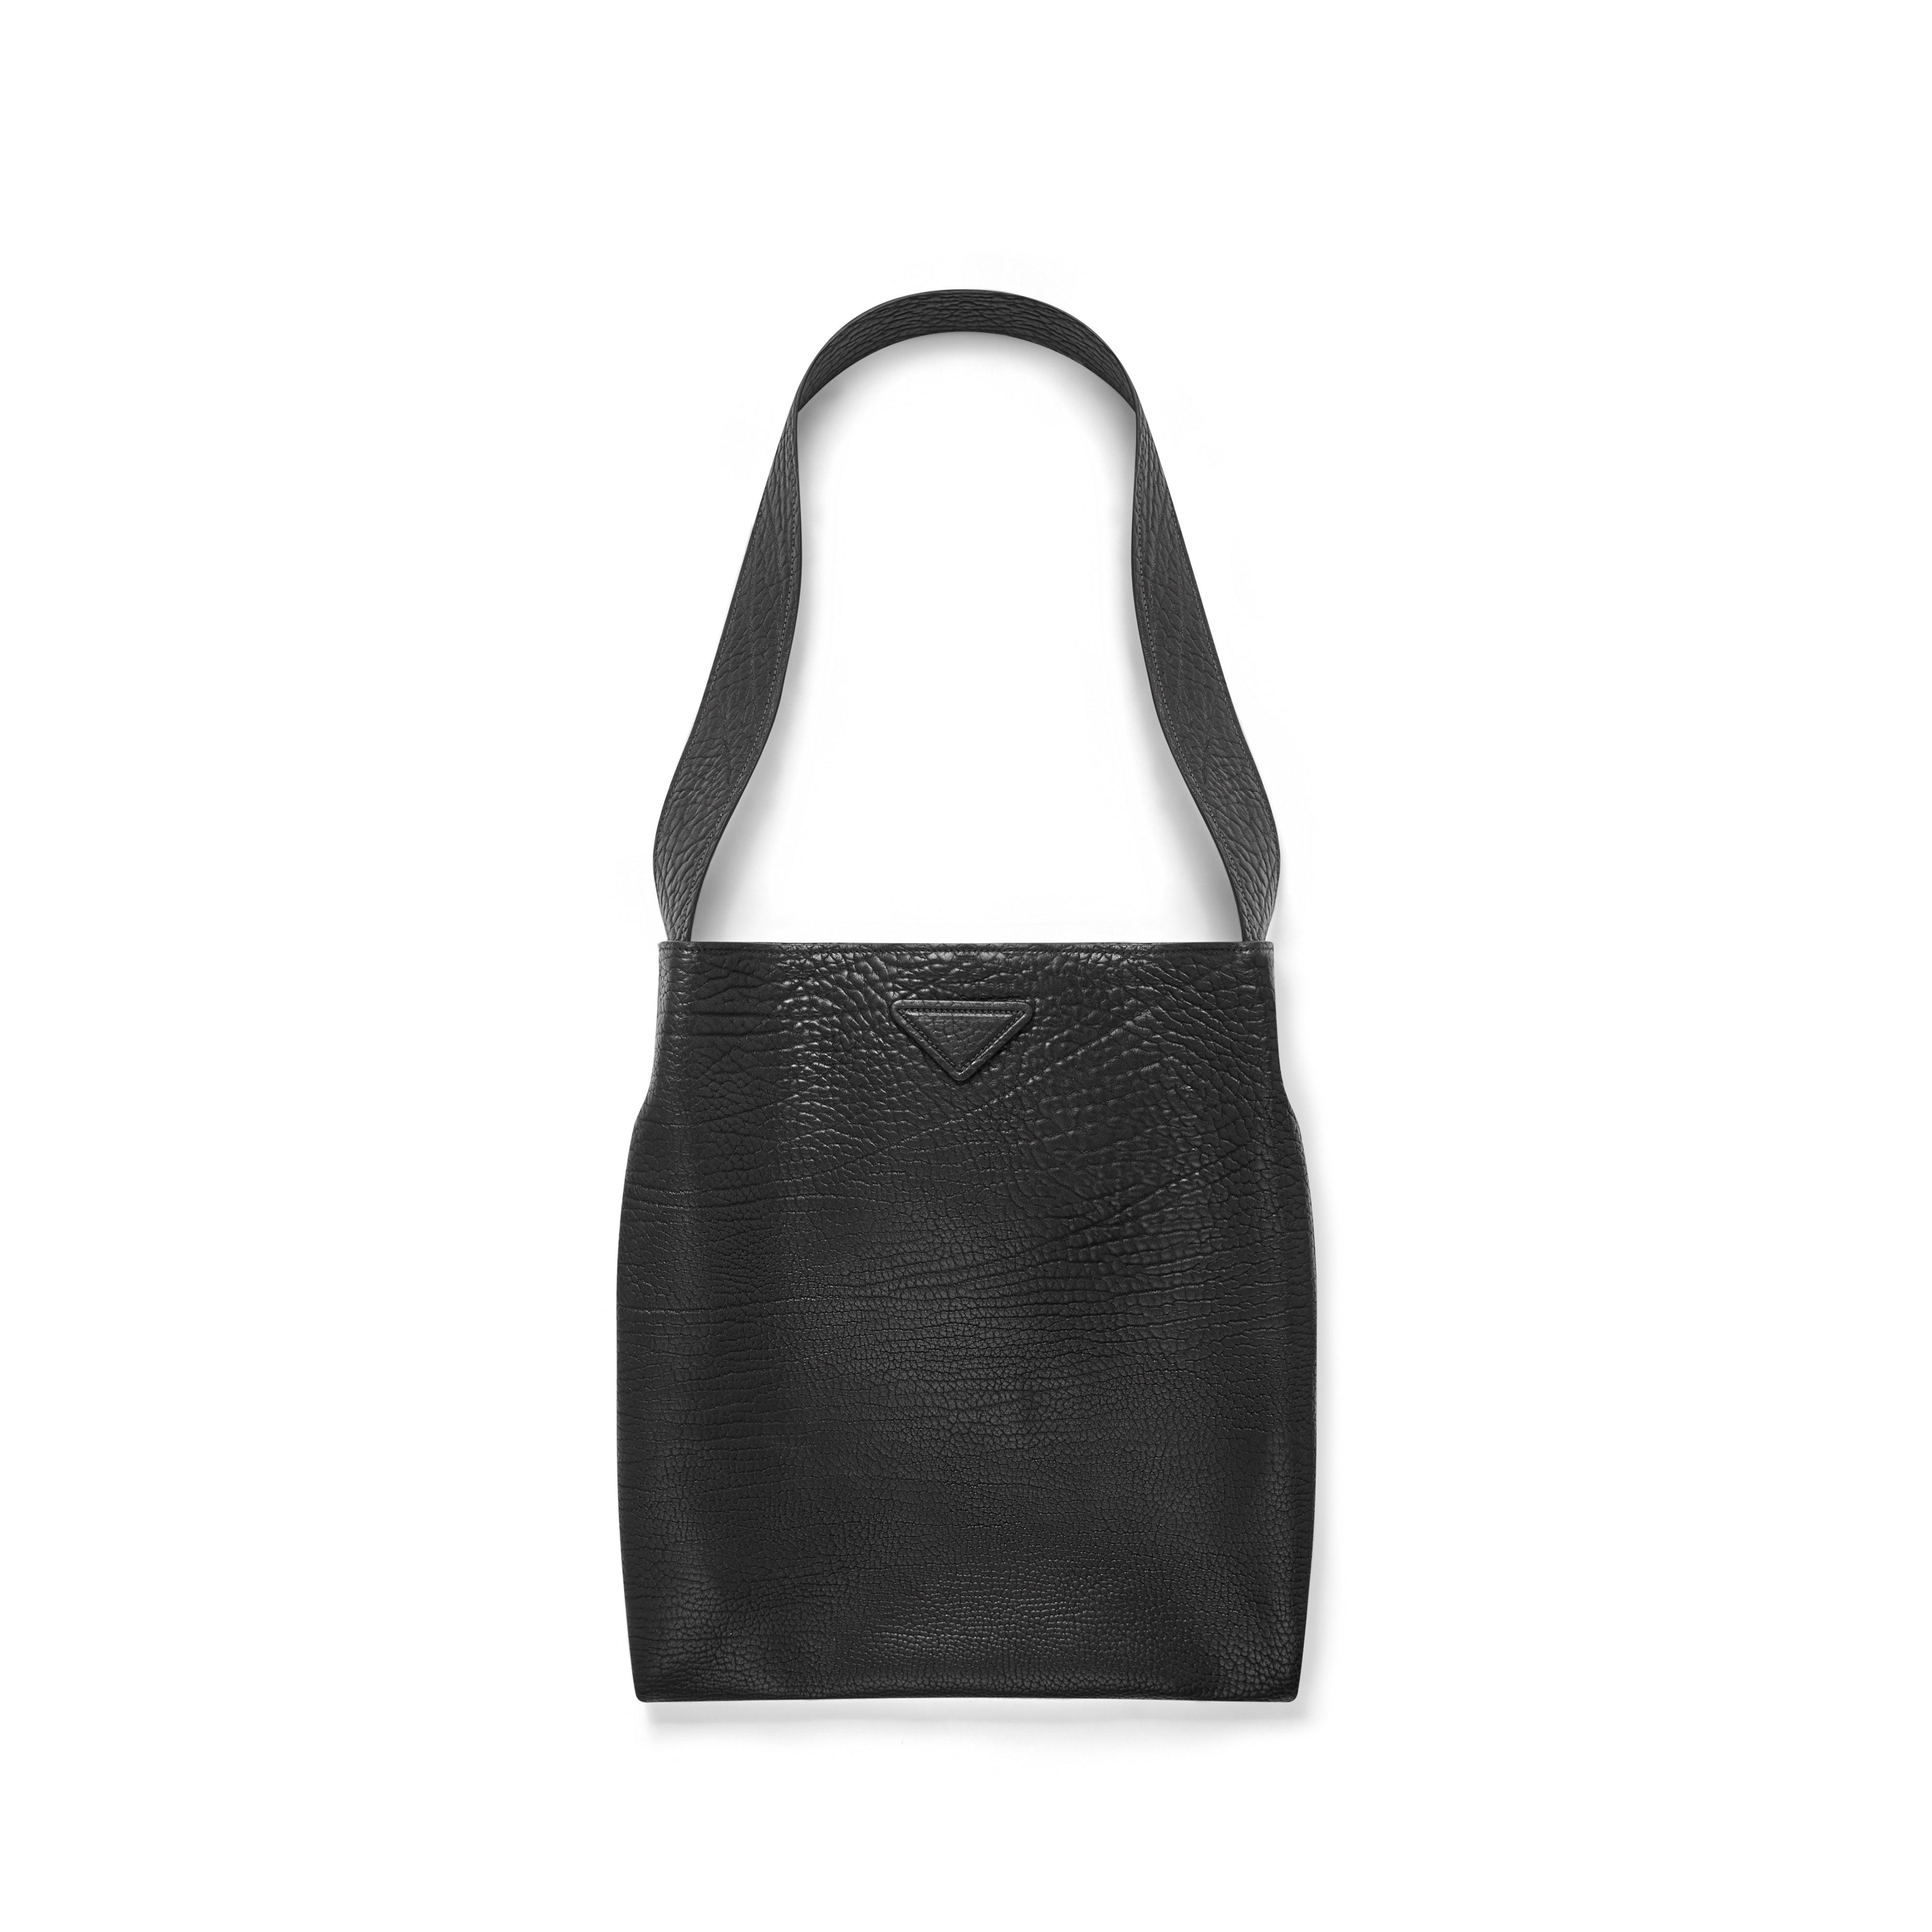 Prada Men's Leather Bag (Black) by PRADA